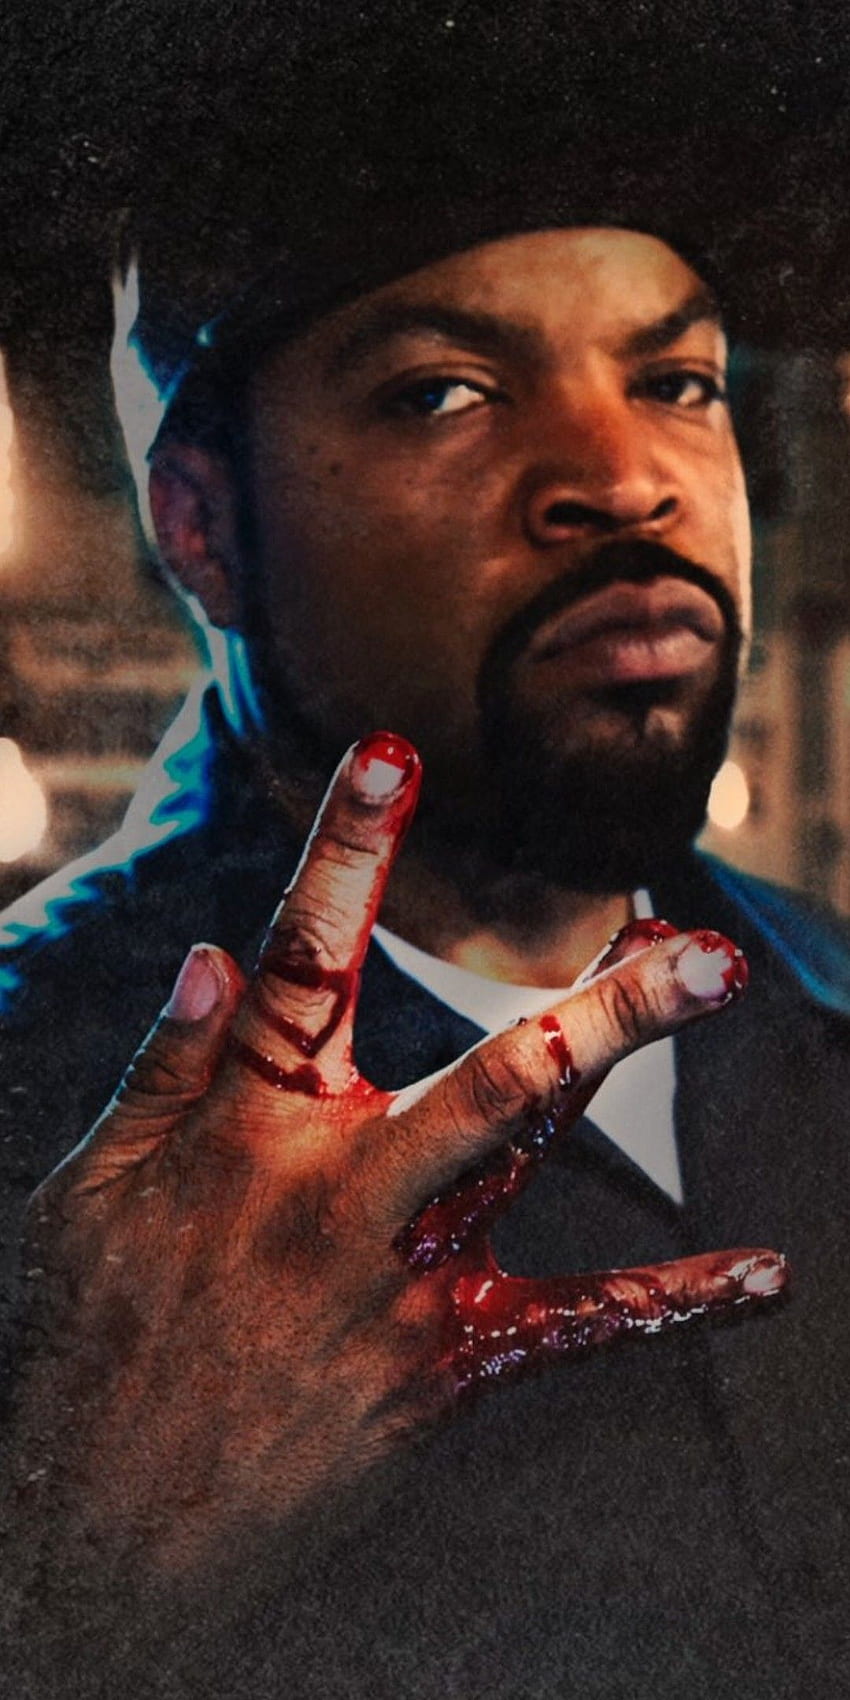  Ice Cube Background Full HD Wallpaper Download  CBEditz